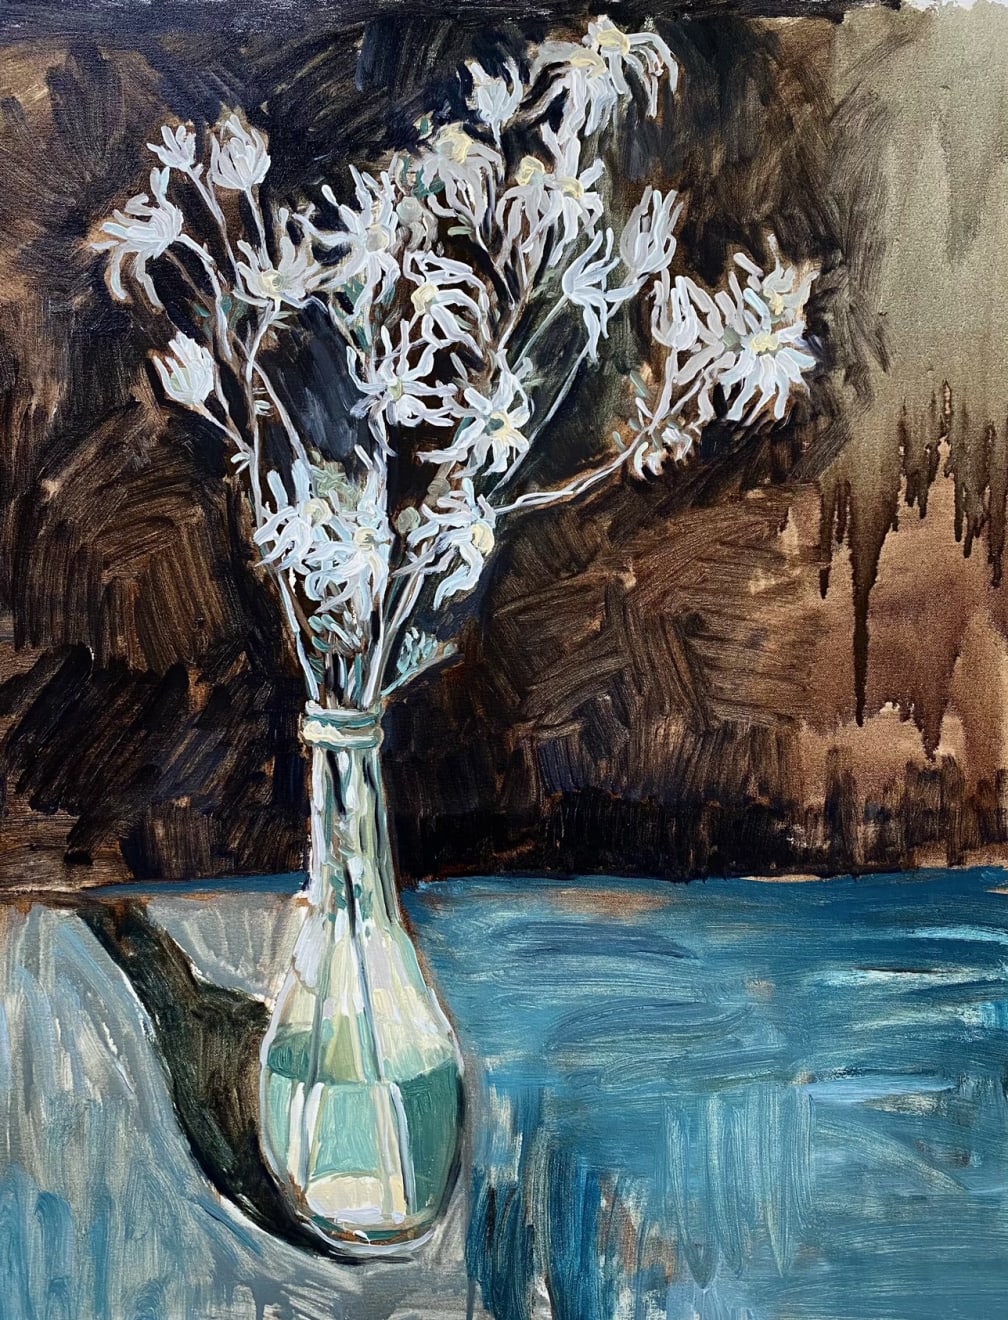 Meg Walters Flannel Flowers Oil On Polycotton Original 55 x 70 cm AUD $1930 GBP £950 SOLD